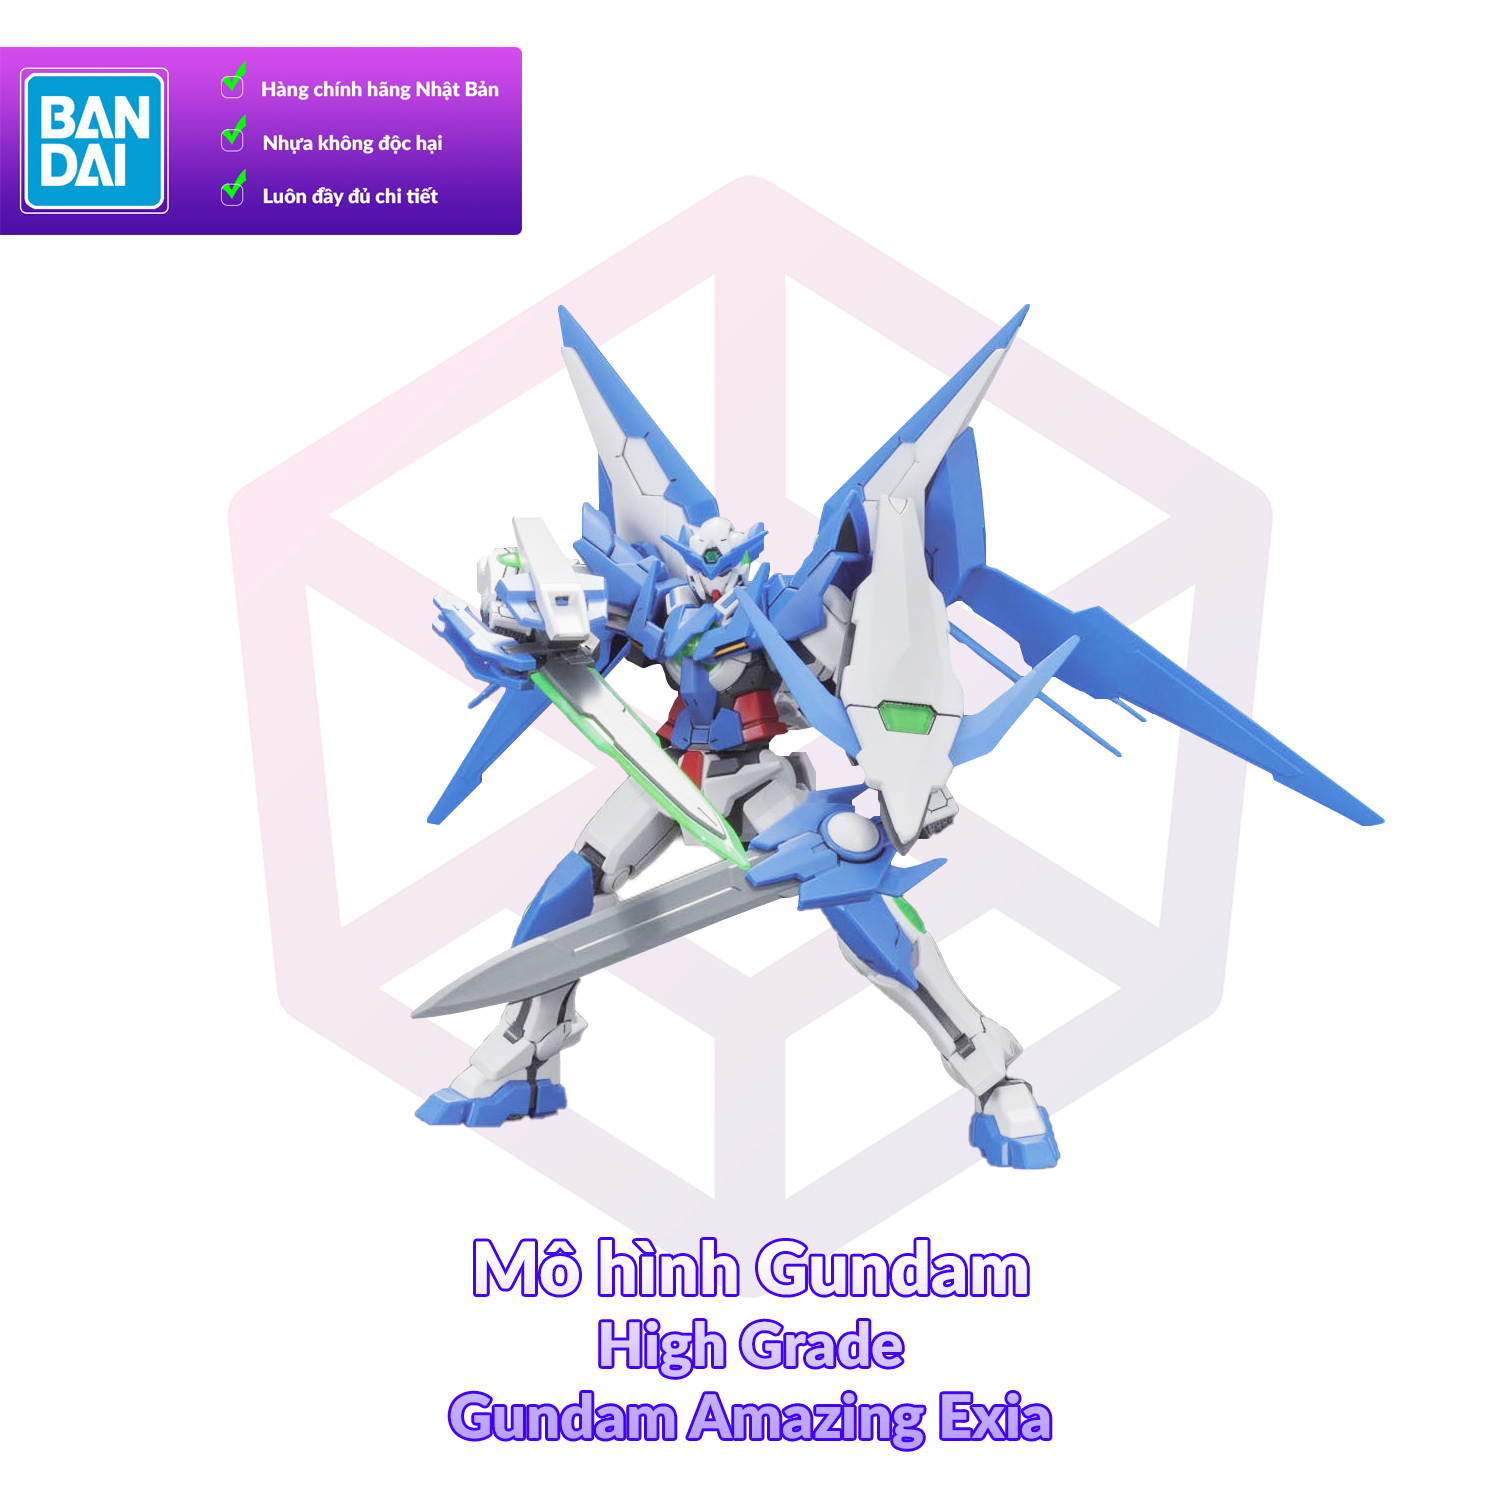 7-11 12 VOUCHER 8%Mô hình Gundam Bandai HG 016 Gundam Amazing Exia 1 144